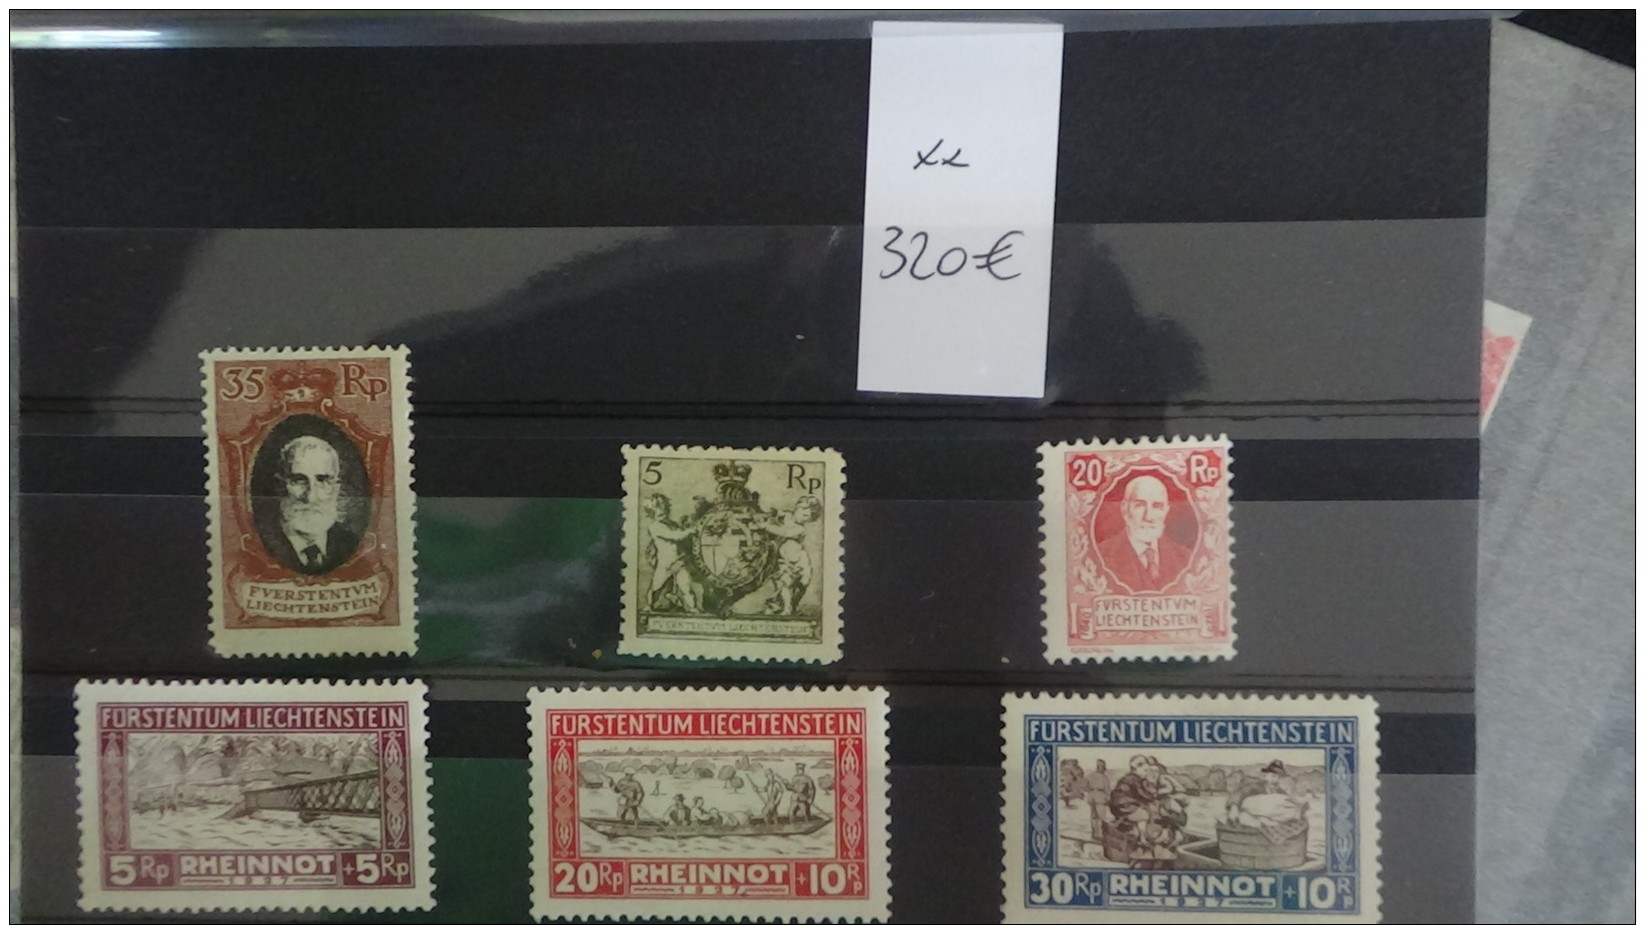 C Gros carton  lot variétés (1800euros) + 2 bandes ND + timbres France ** + obl + Chine + classeurs + albums timbres obl